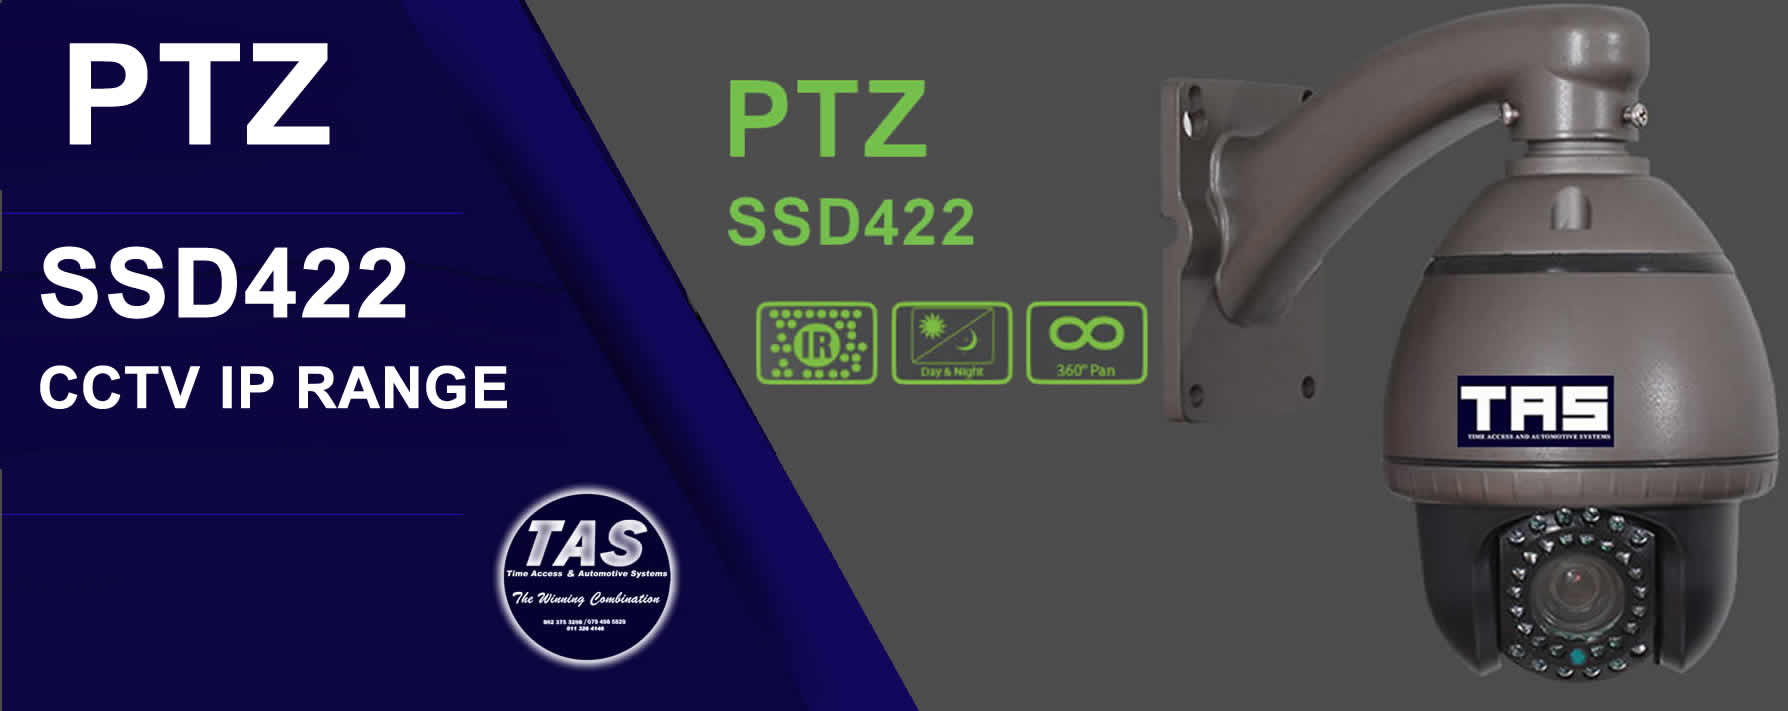 PTZ SSD442 CCTV MINI  Cameras Analogue Bullet Range Product - MINI DOME PTZ CCTV IP Cameras security control banner